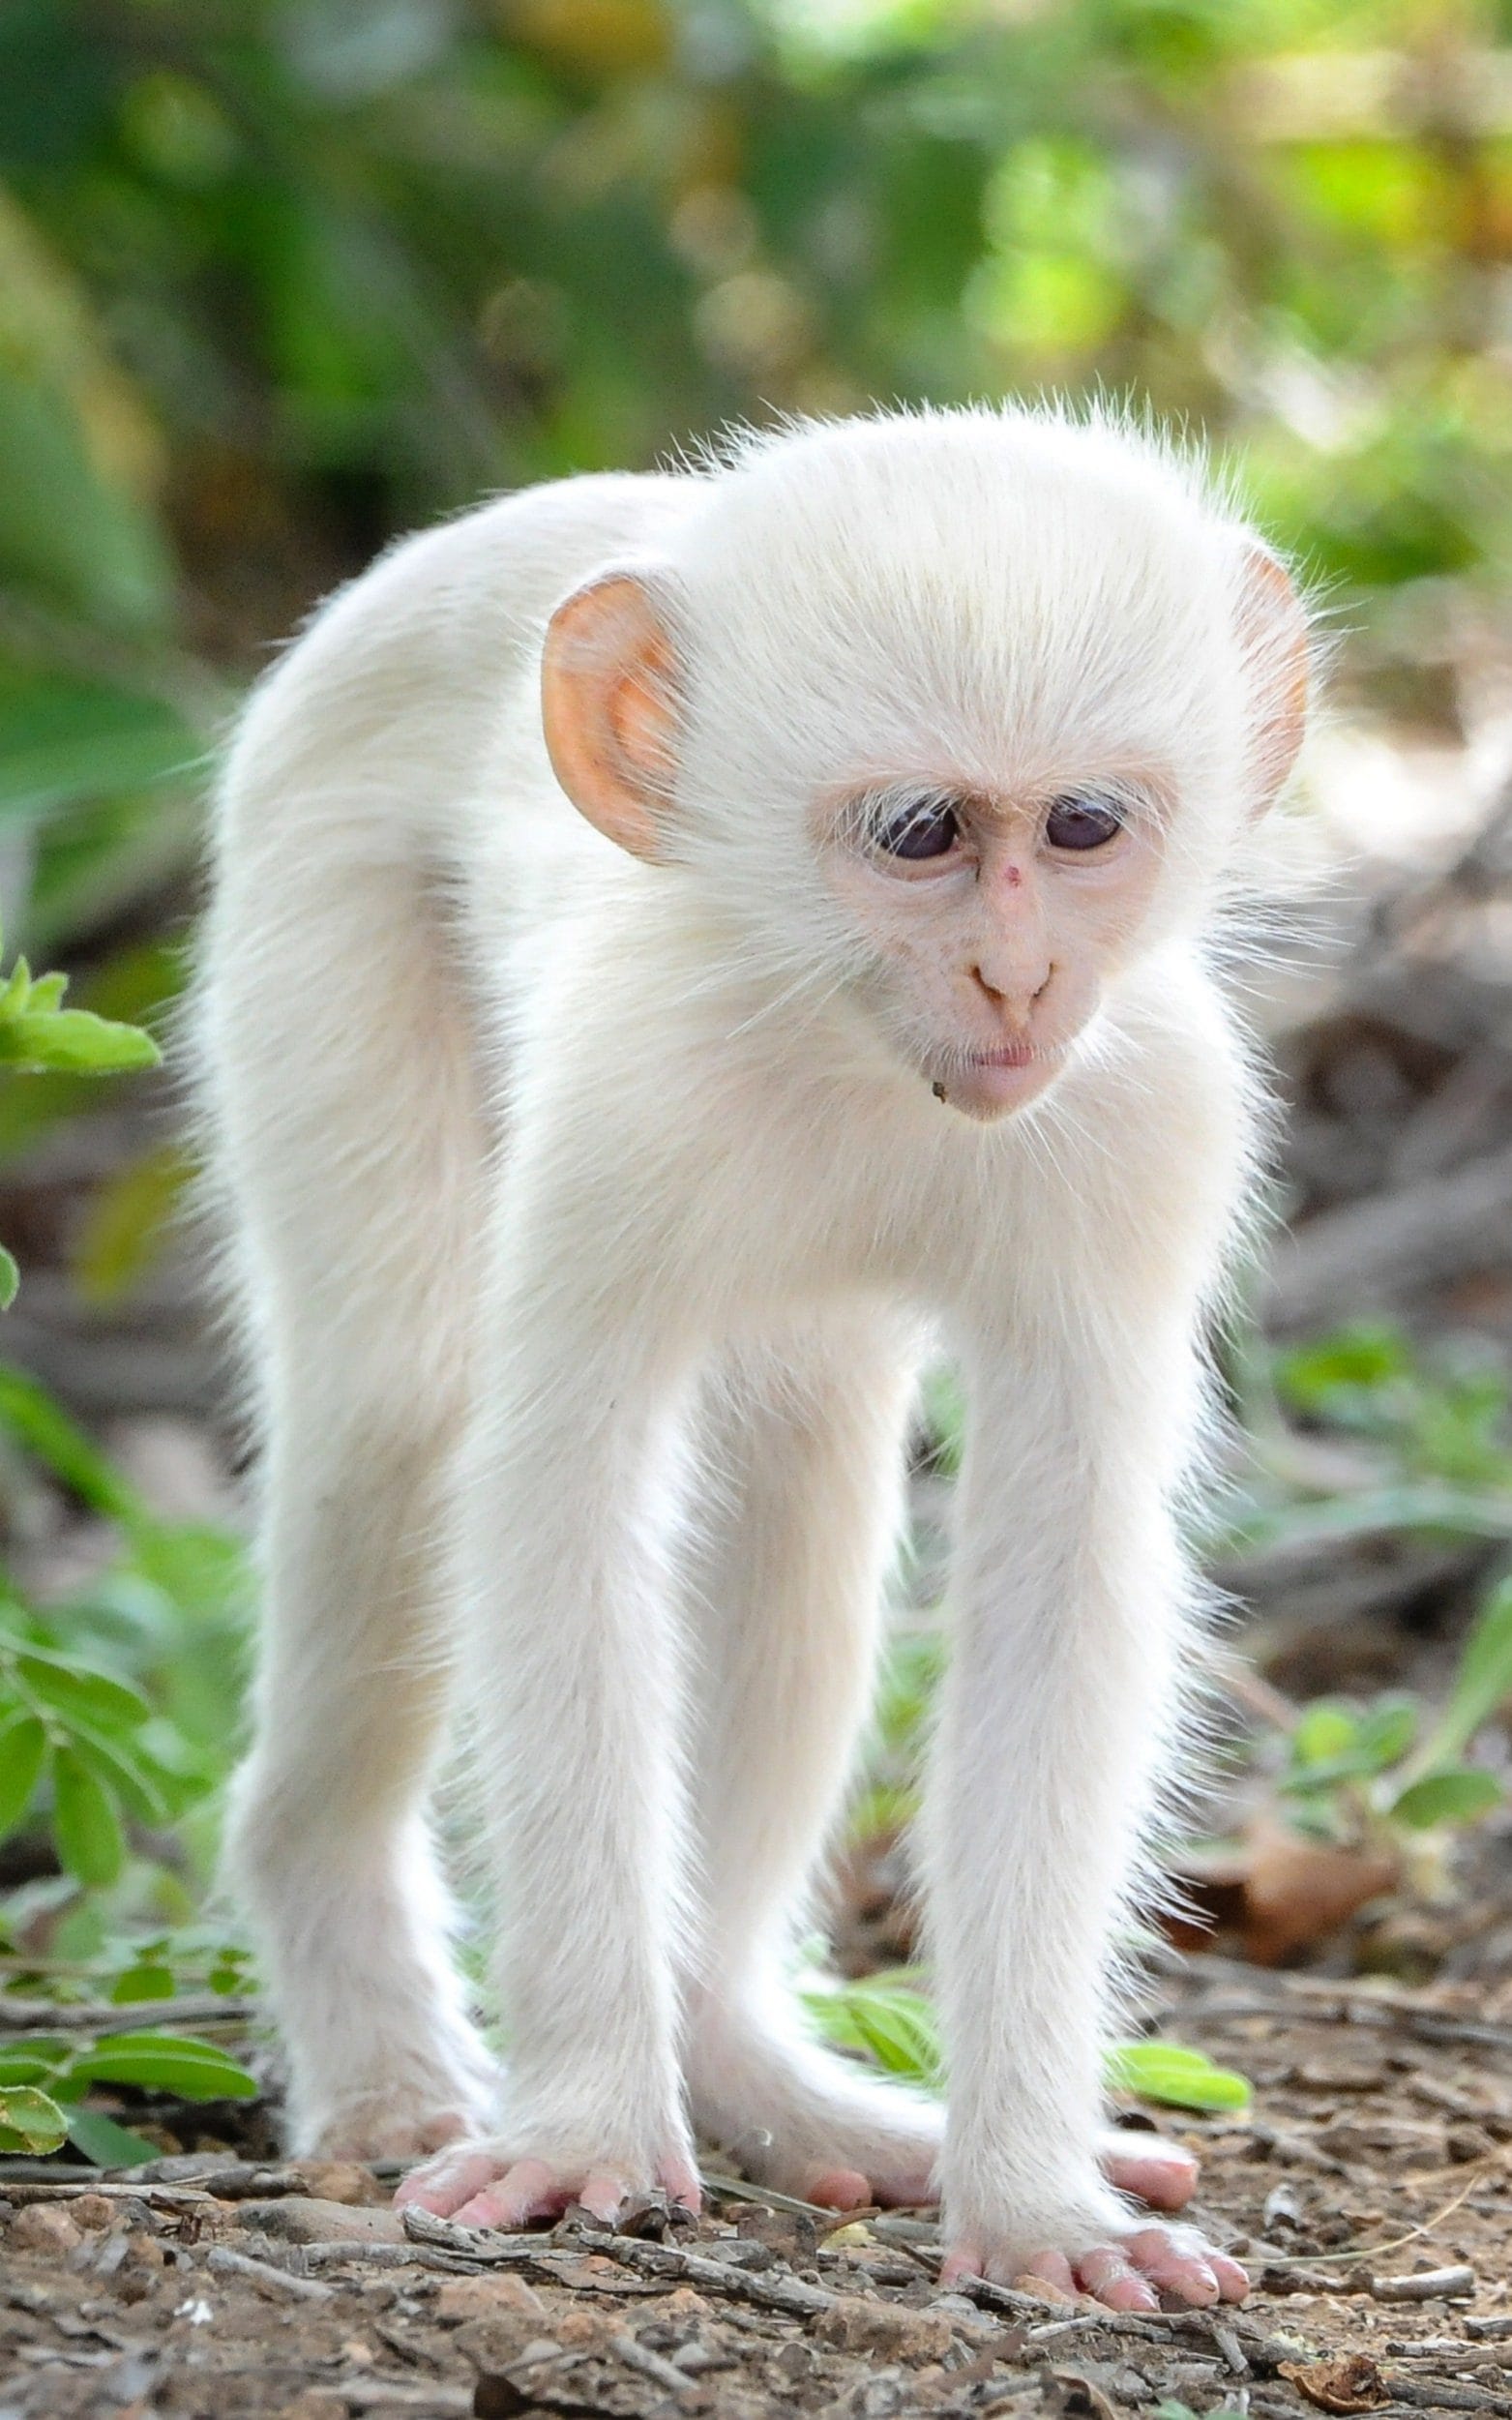 Amazing albino animals, from alligator to orangutan